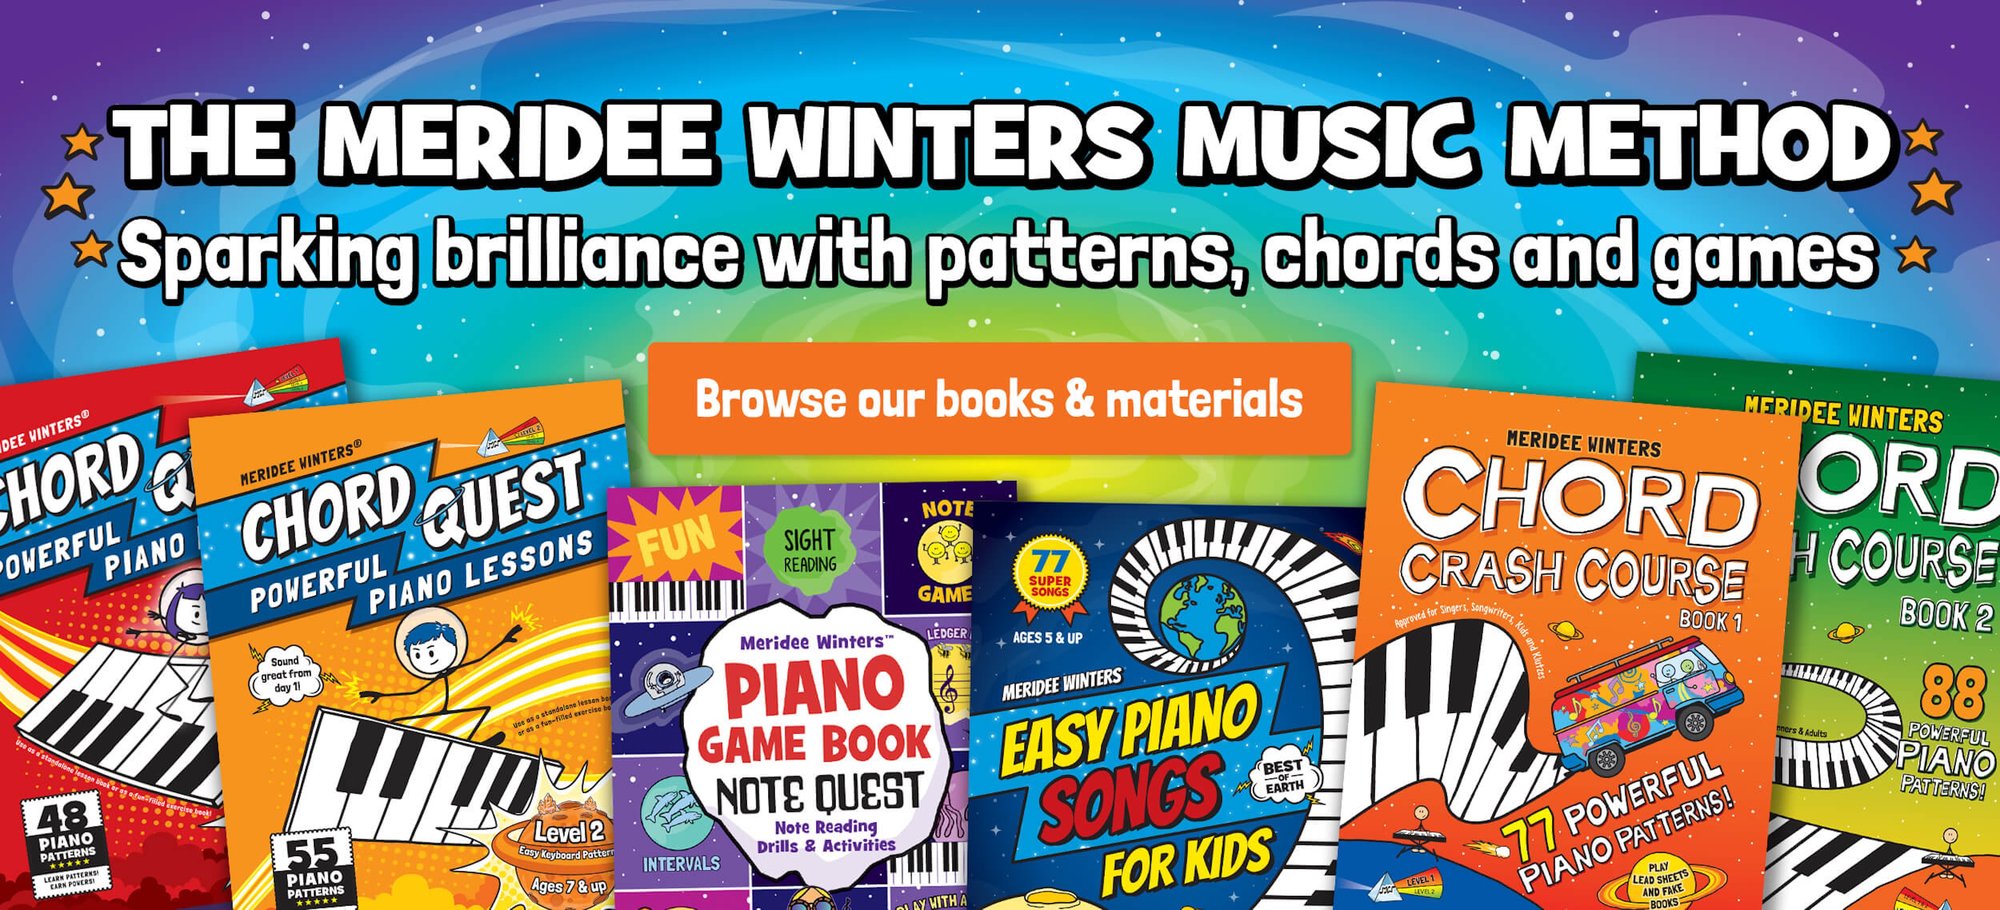 meridee winters music method